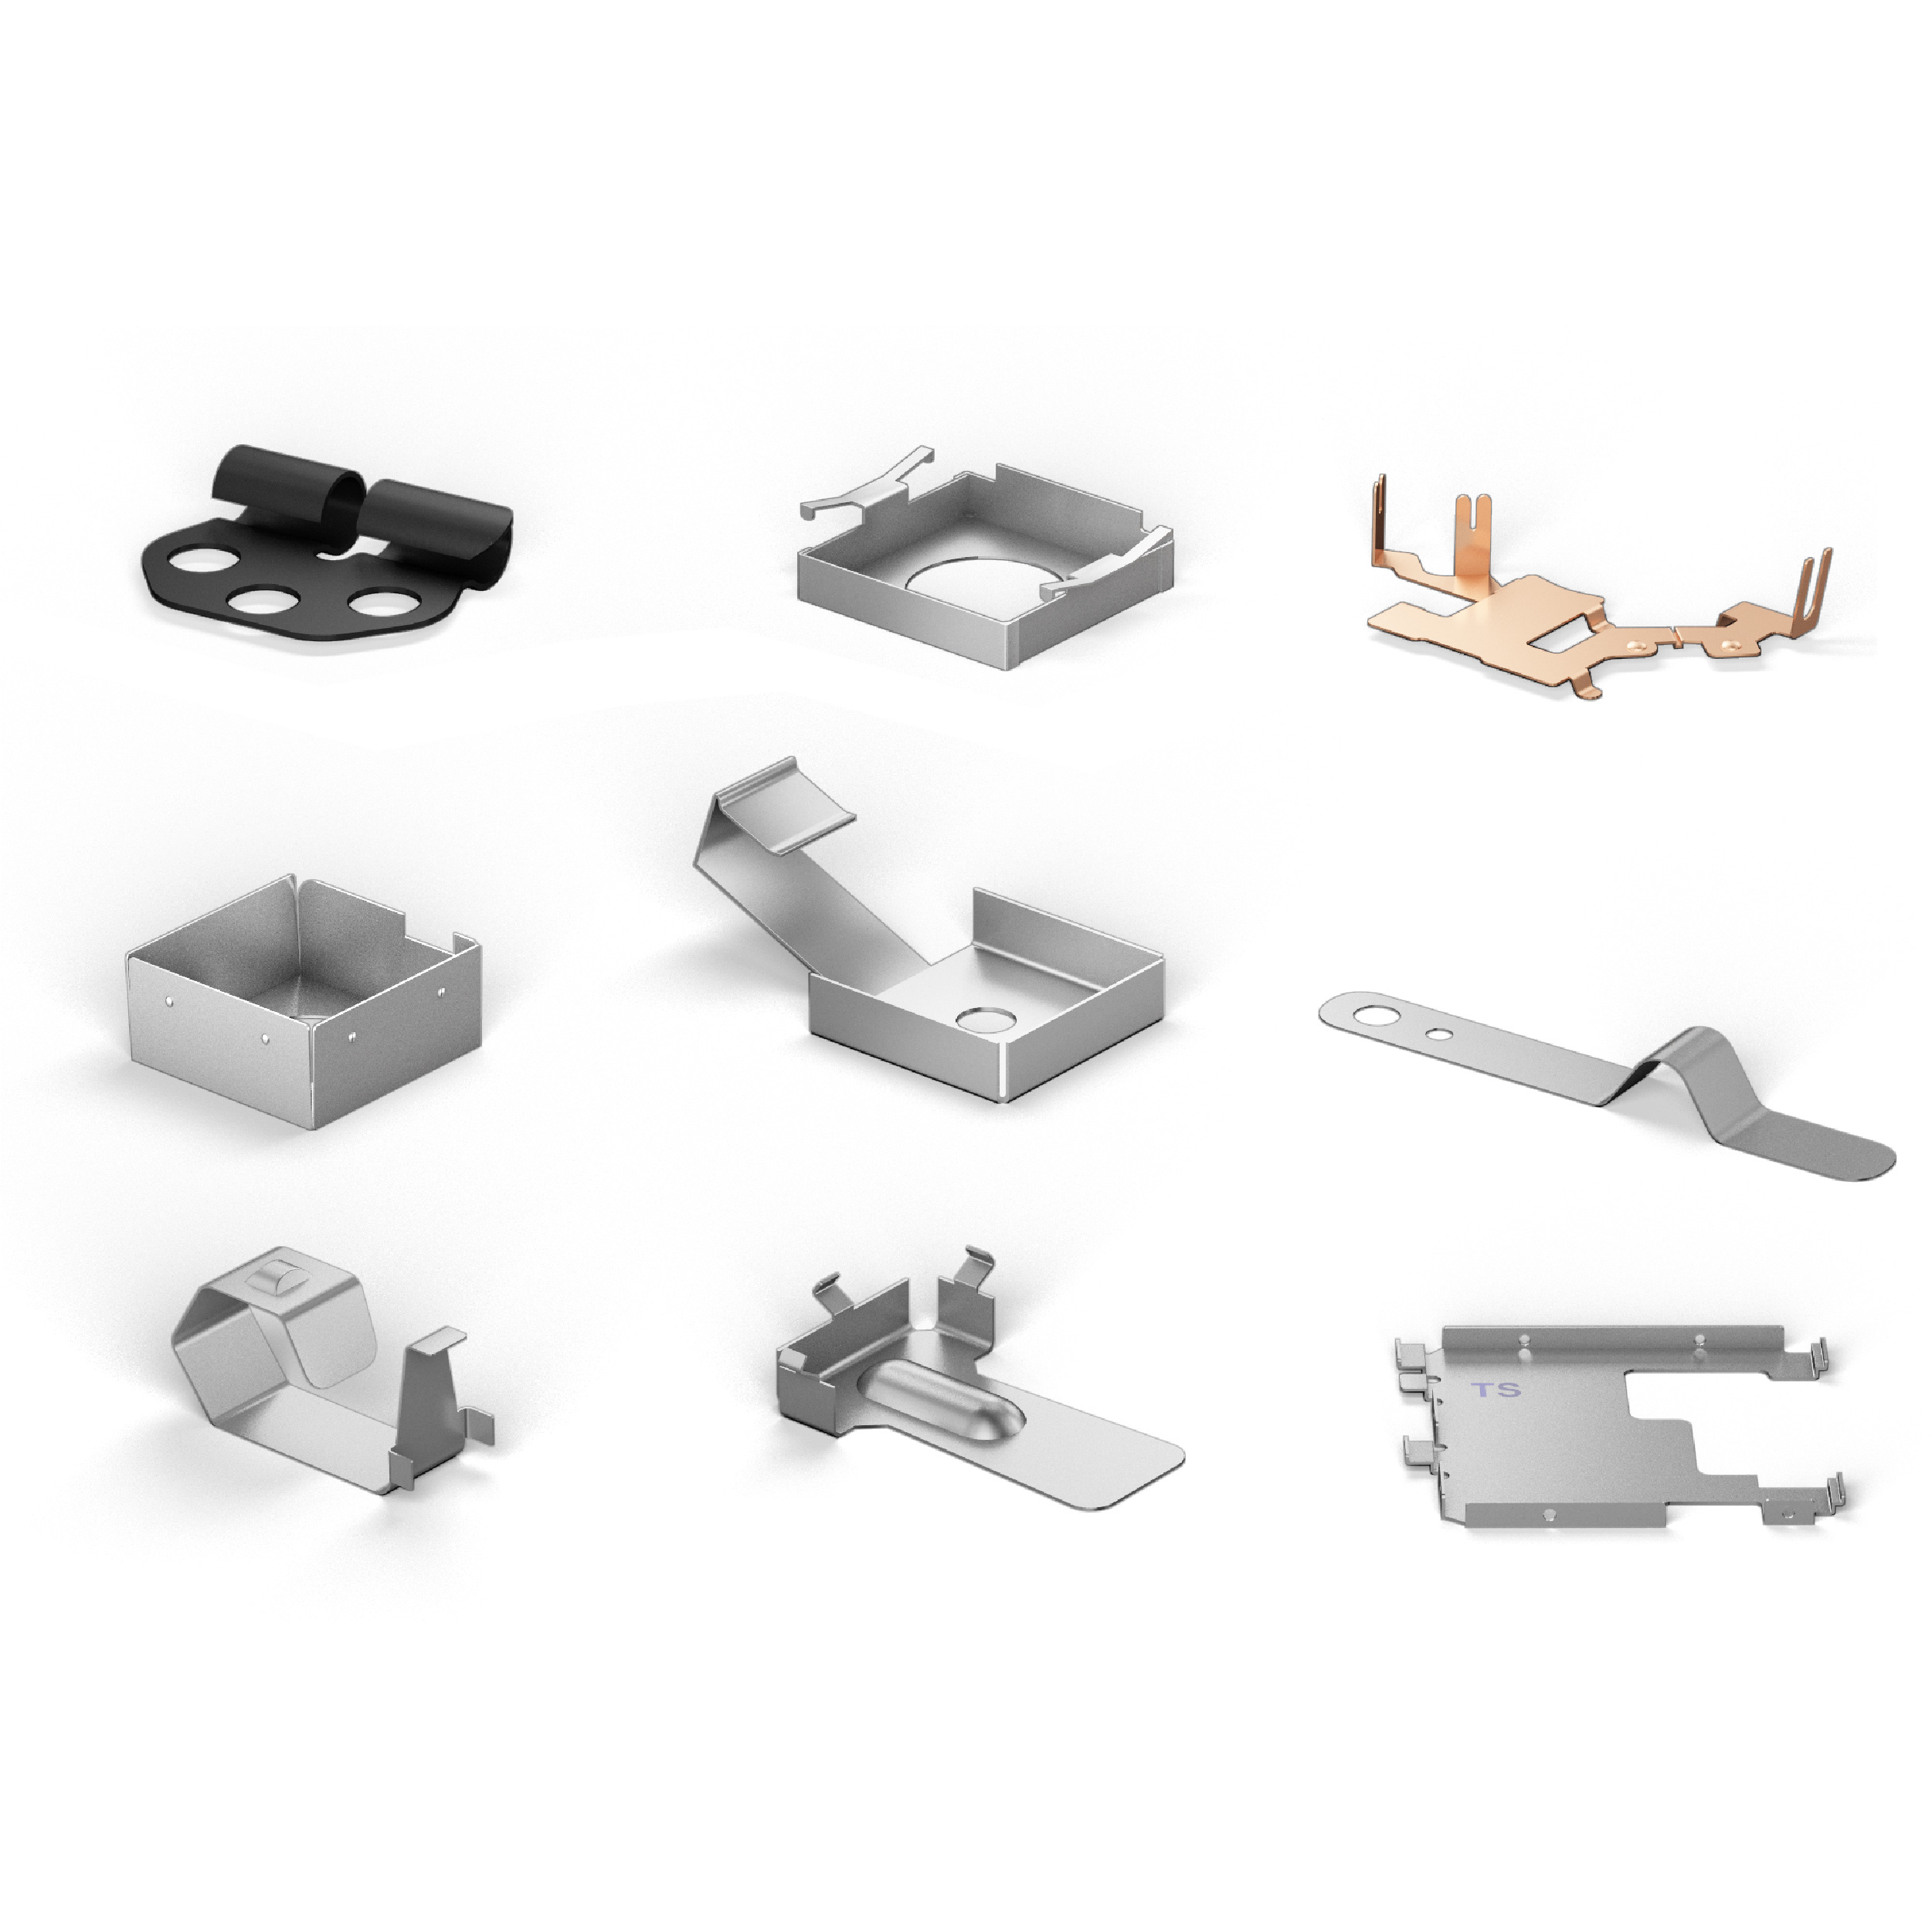 METAL STAMPINGS/Precision Stamped Parts and Custom Metal stamping